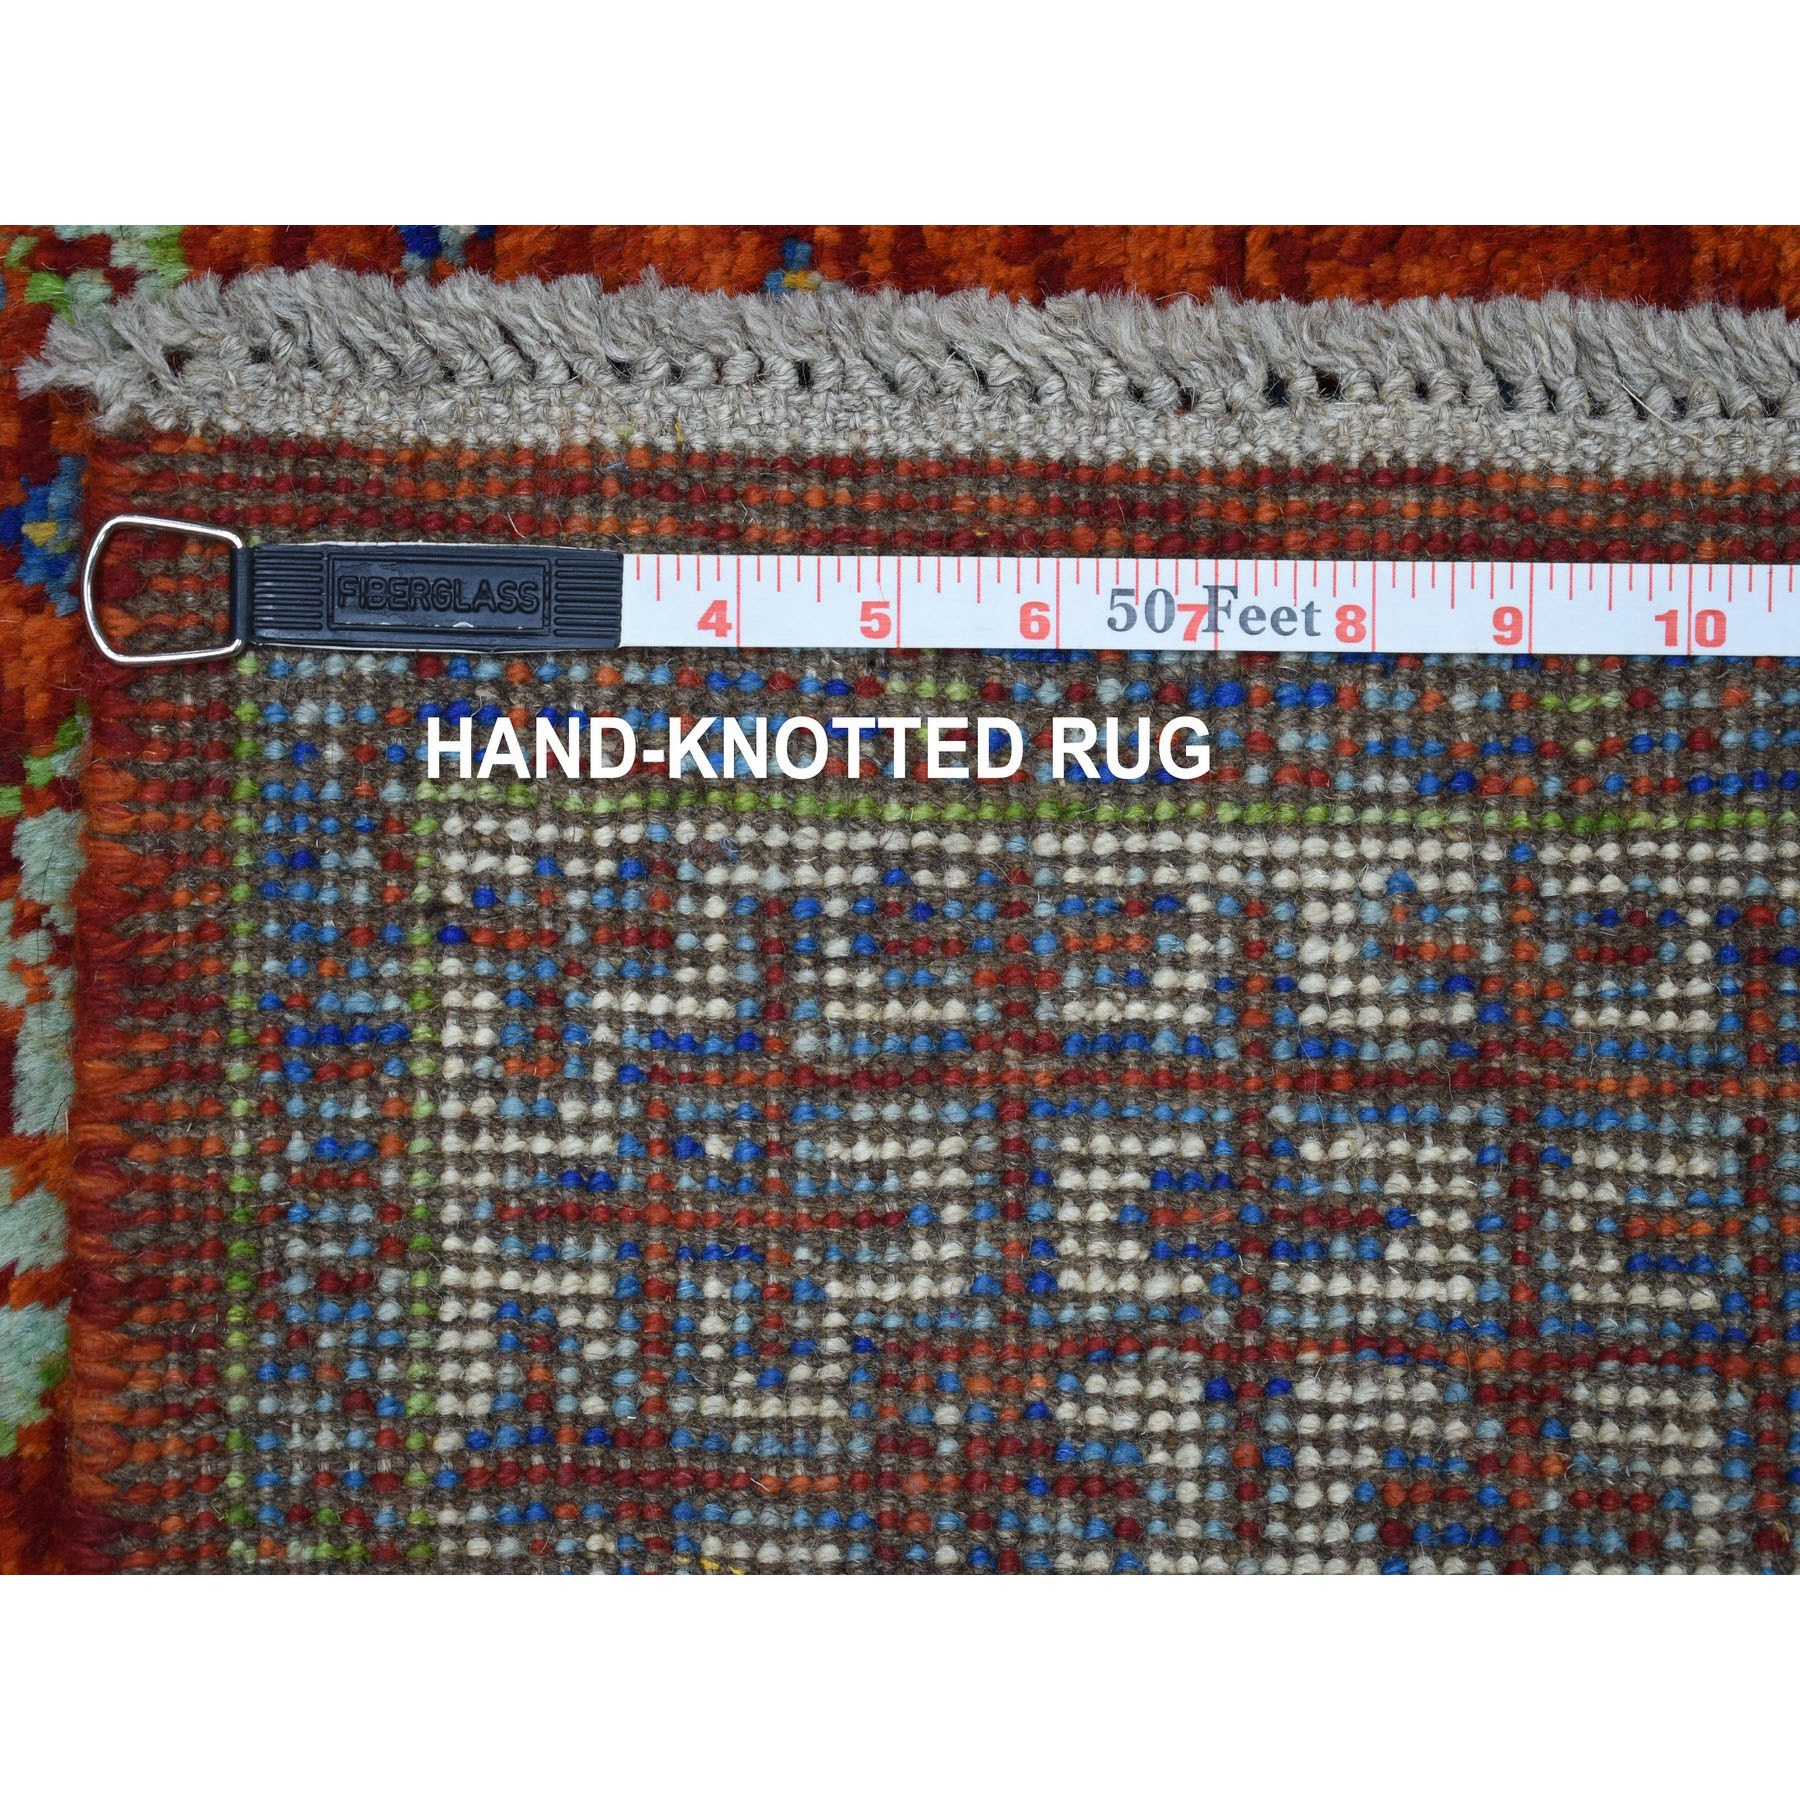 3-6 x4-9  Orange Mamluk Design Colorful Afghan Baluch Hand Knotted 100% Wool Oriental Rug 